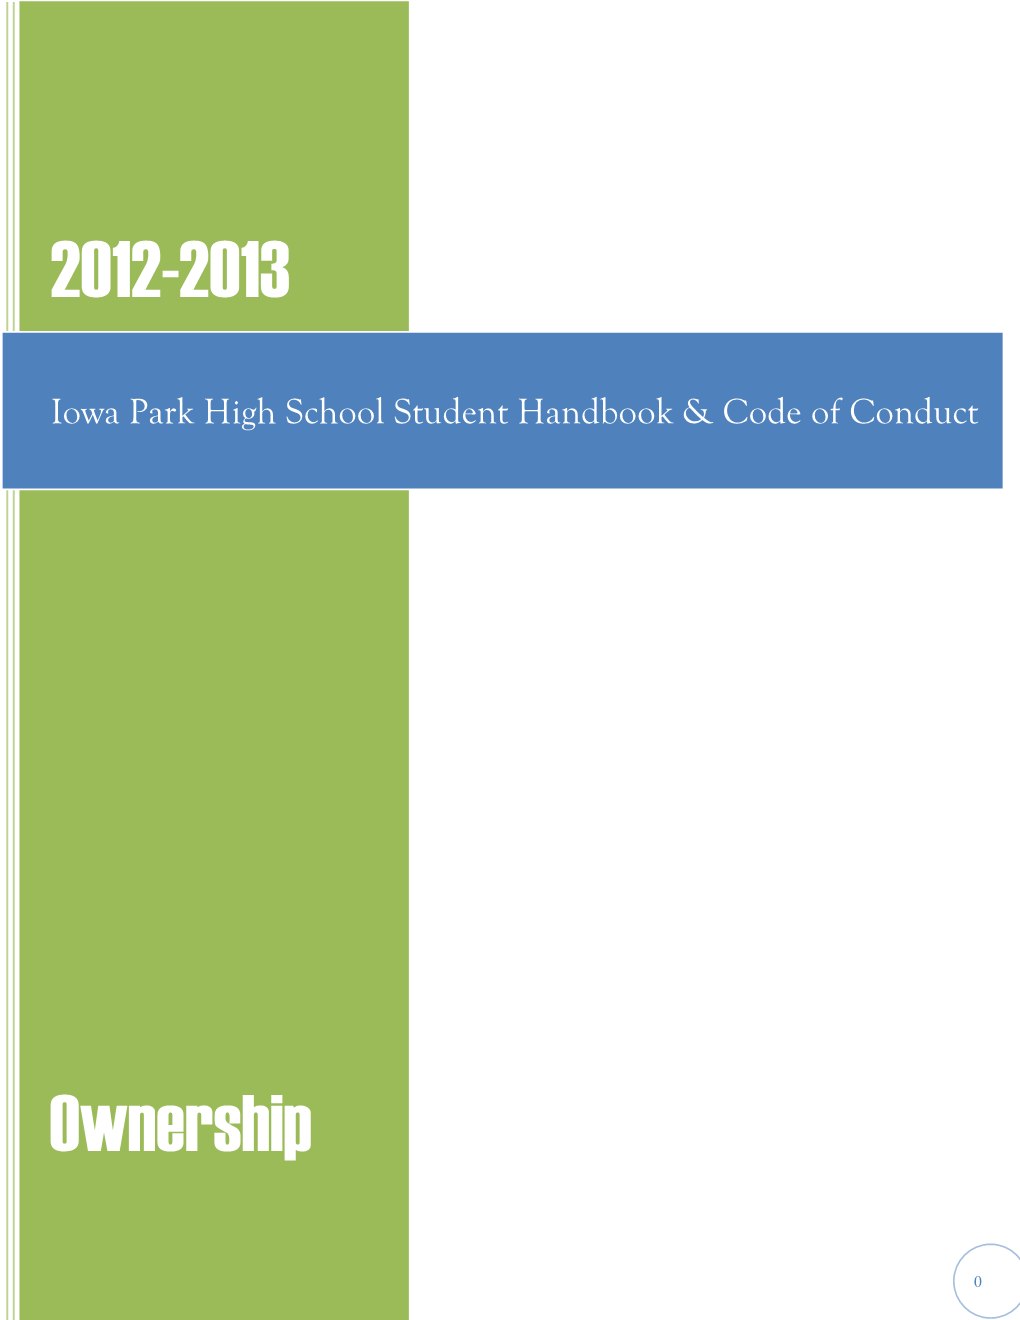 Iowa Park High School Student Handbook & Code of Conduct